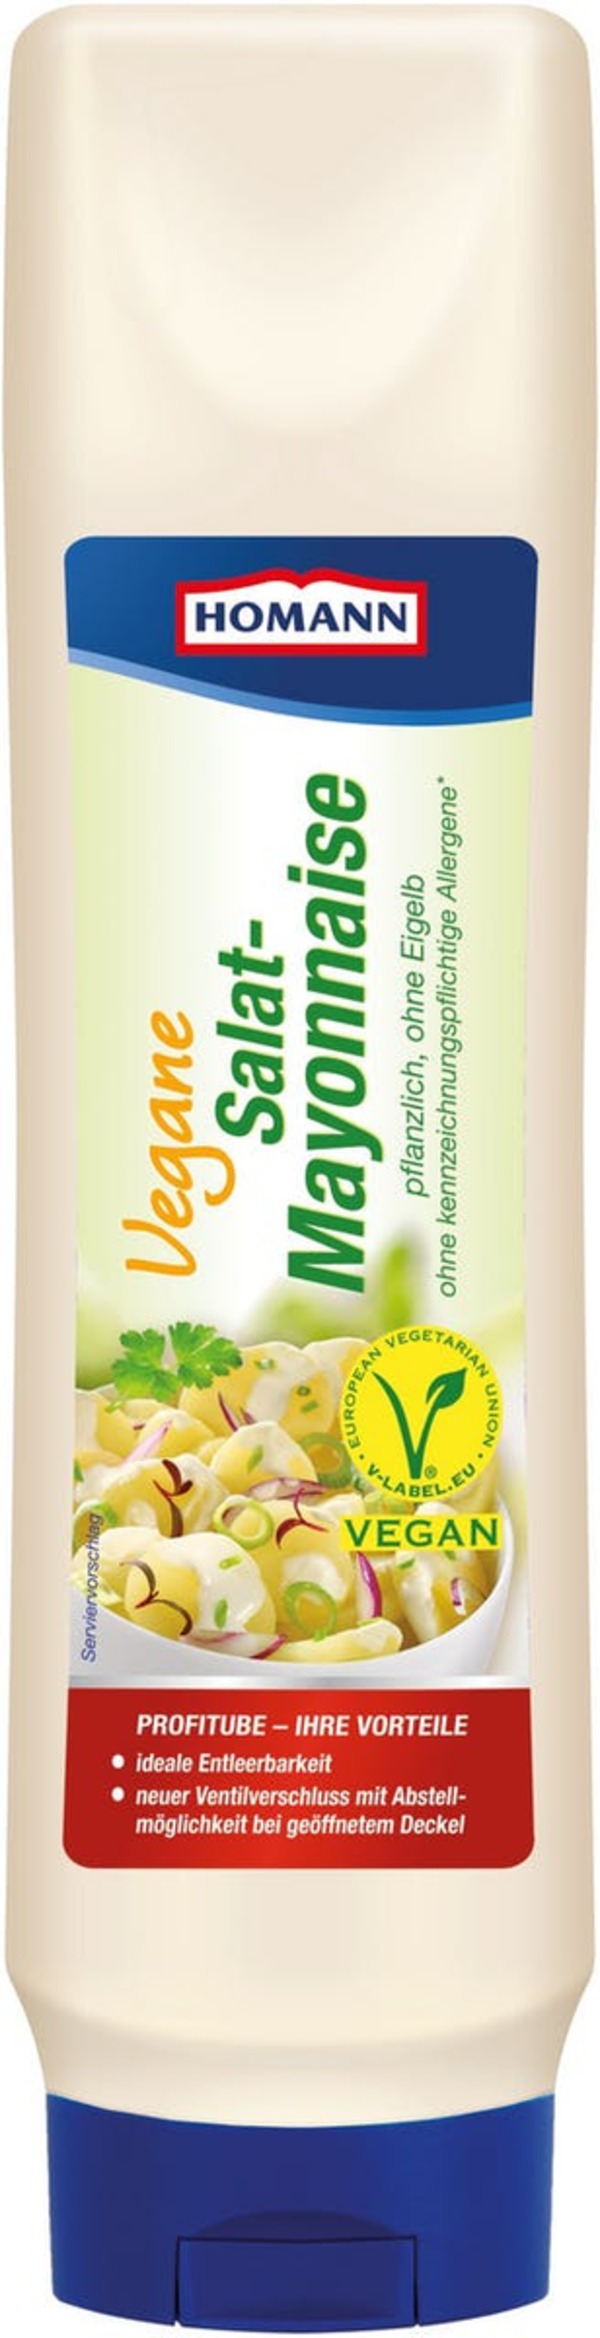 Bild 1 von Homann Vegane Salat Mayonnaise 49,9 % Fett (873 g)